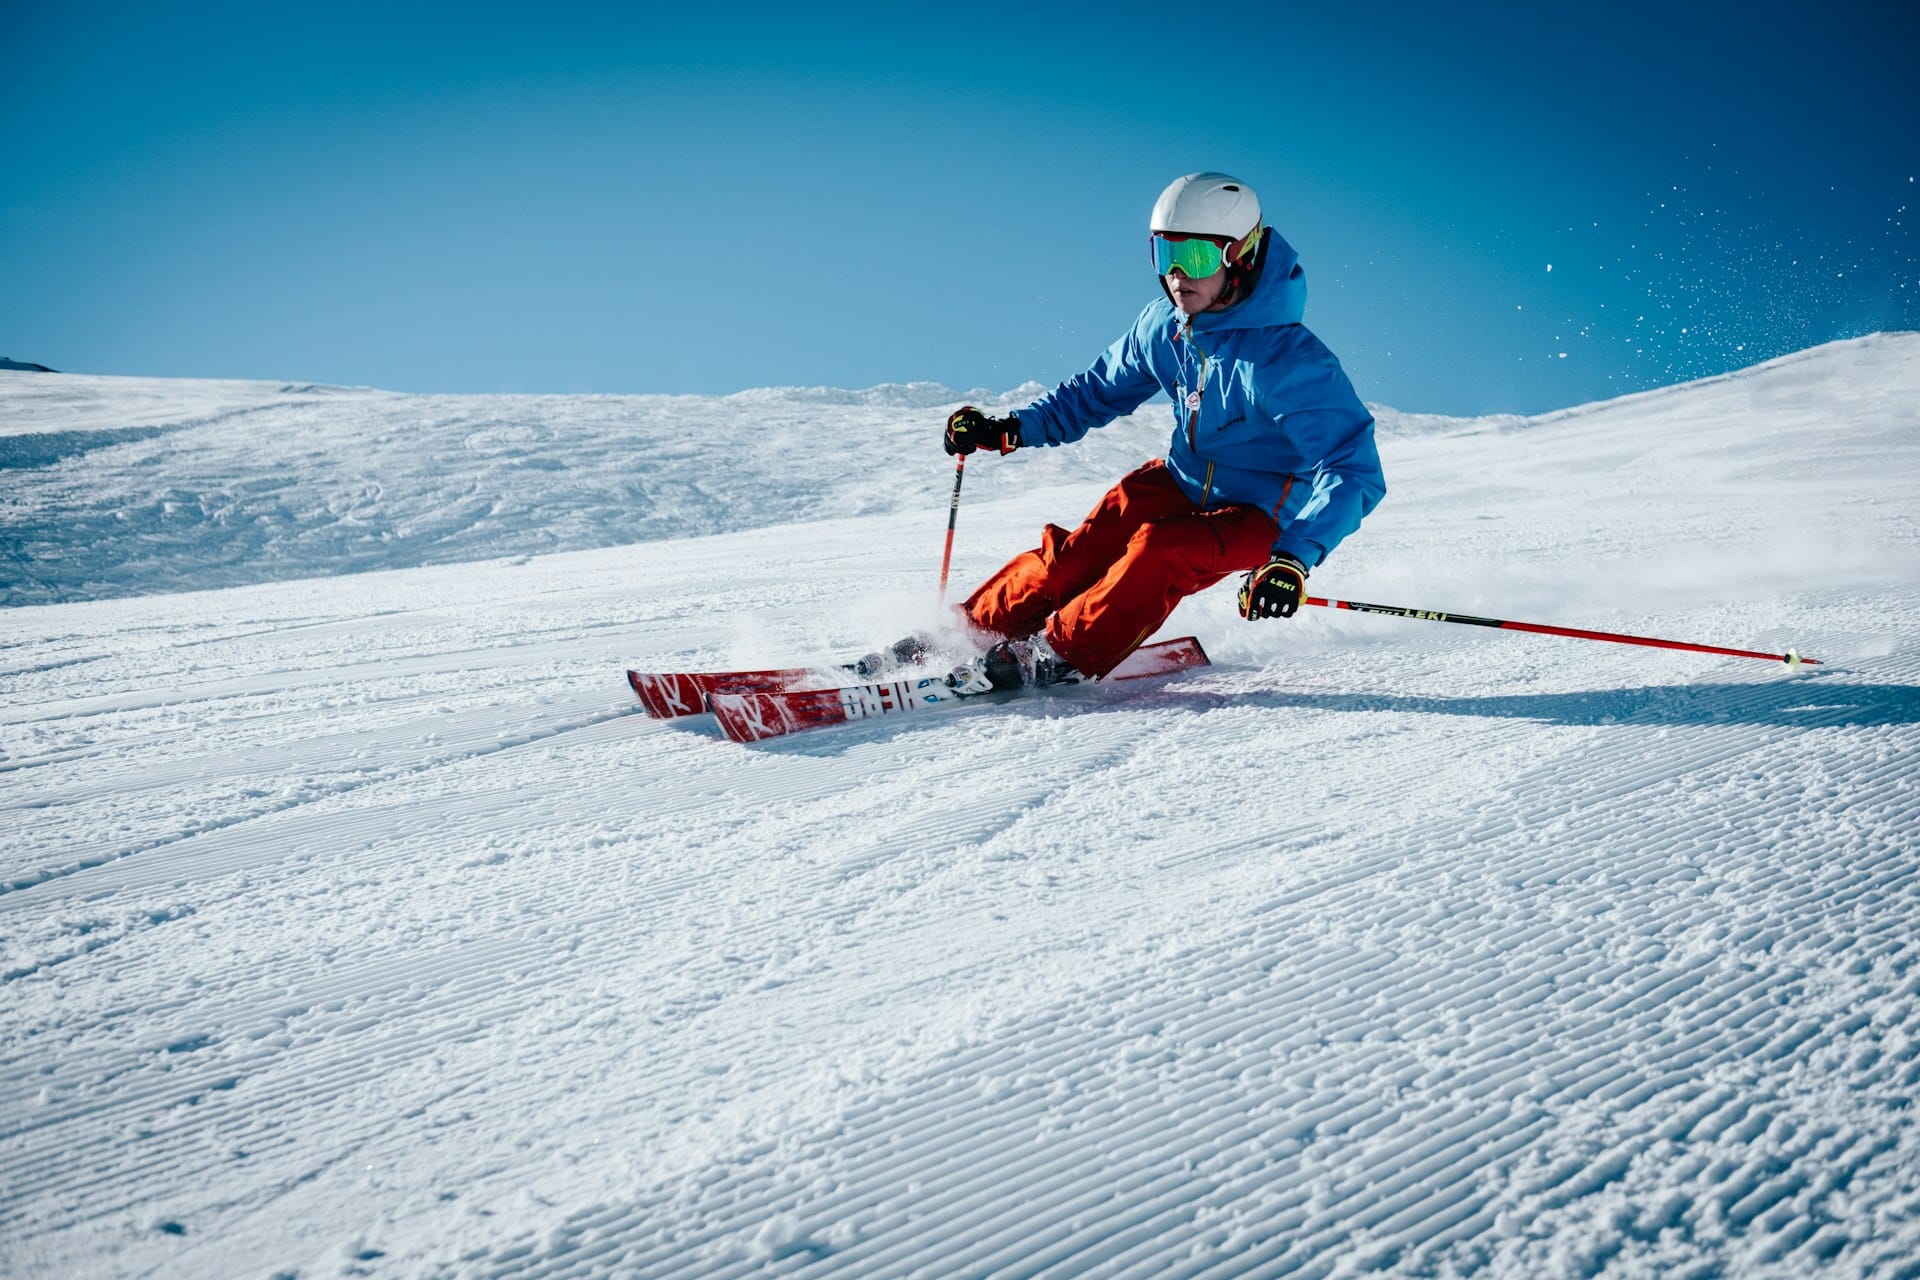 Skiback, porte-skis enfant bleu - Wantalis